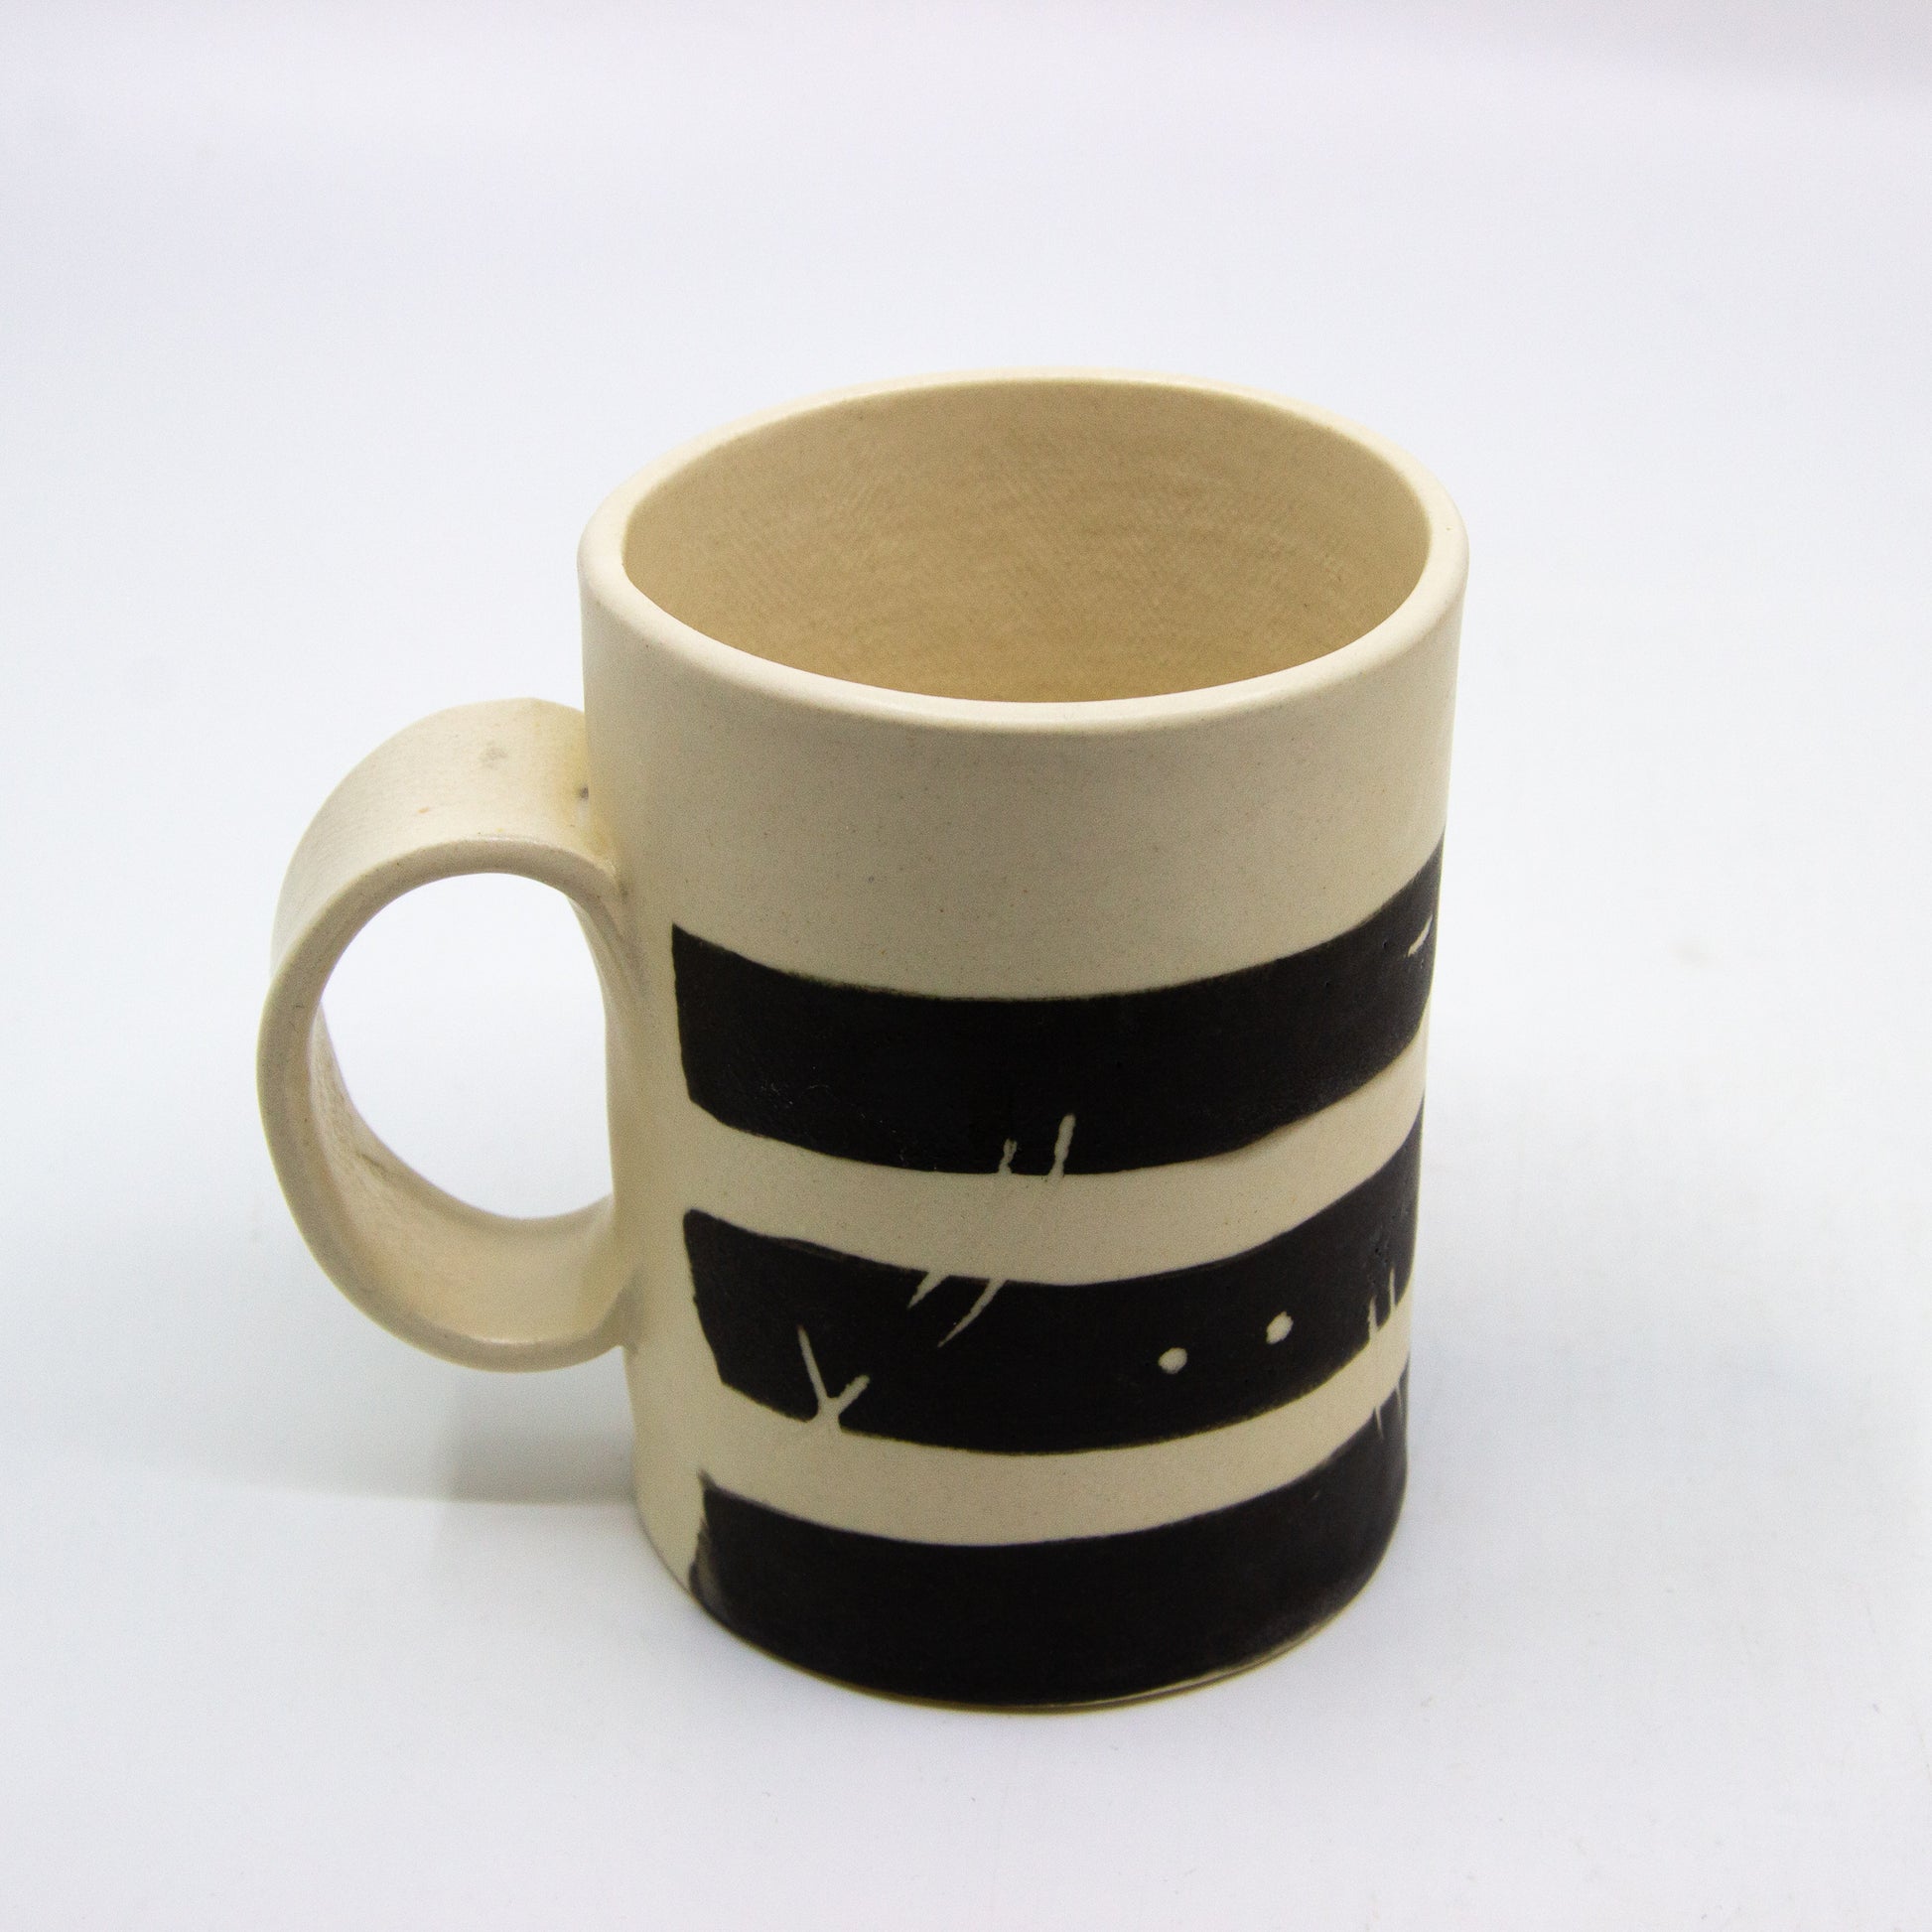 Black and white stripped mug